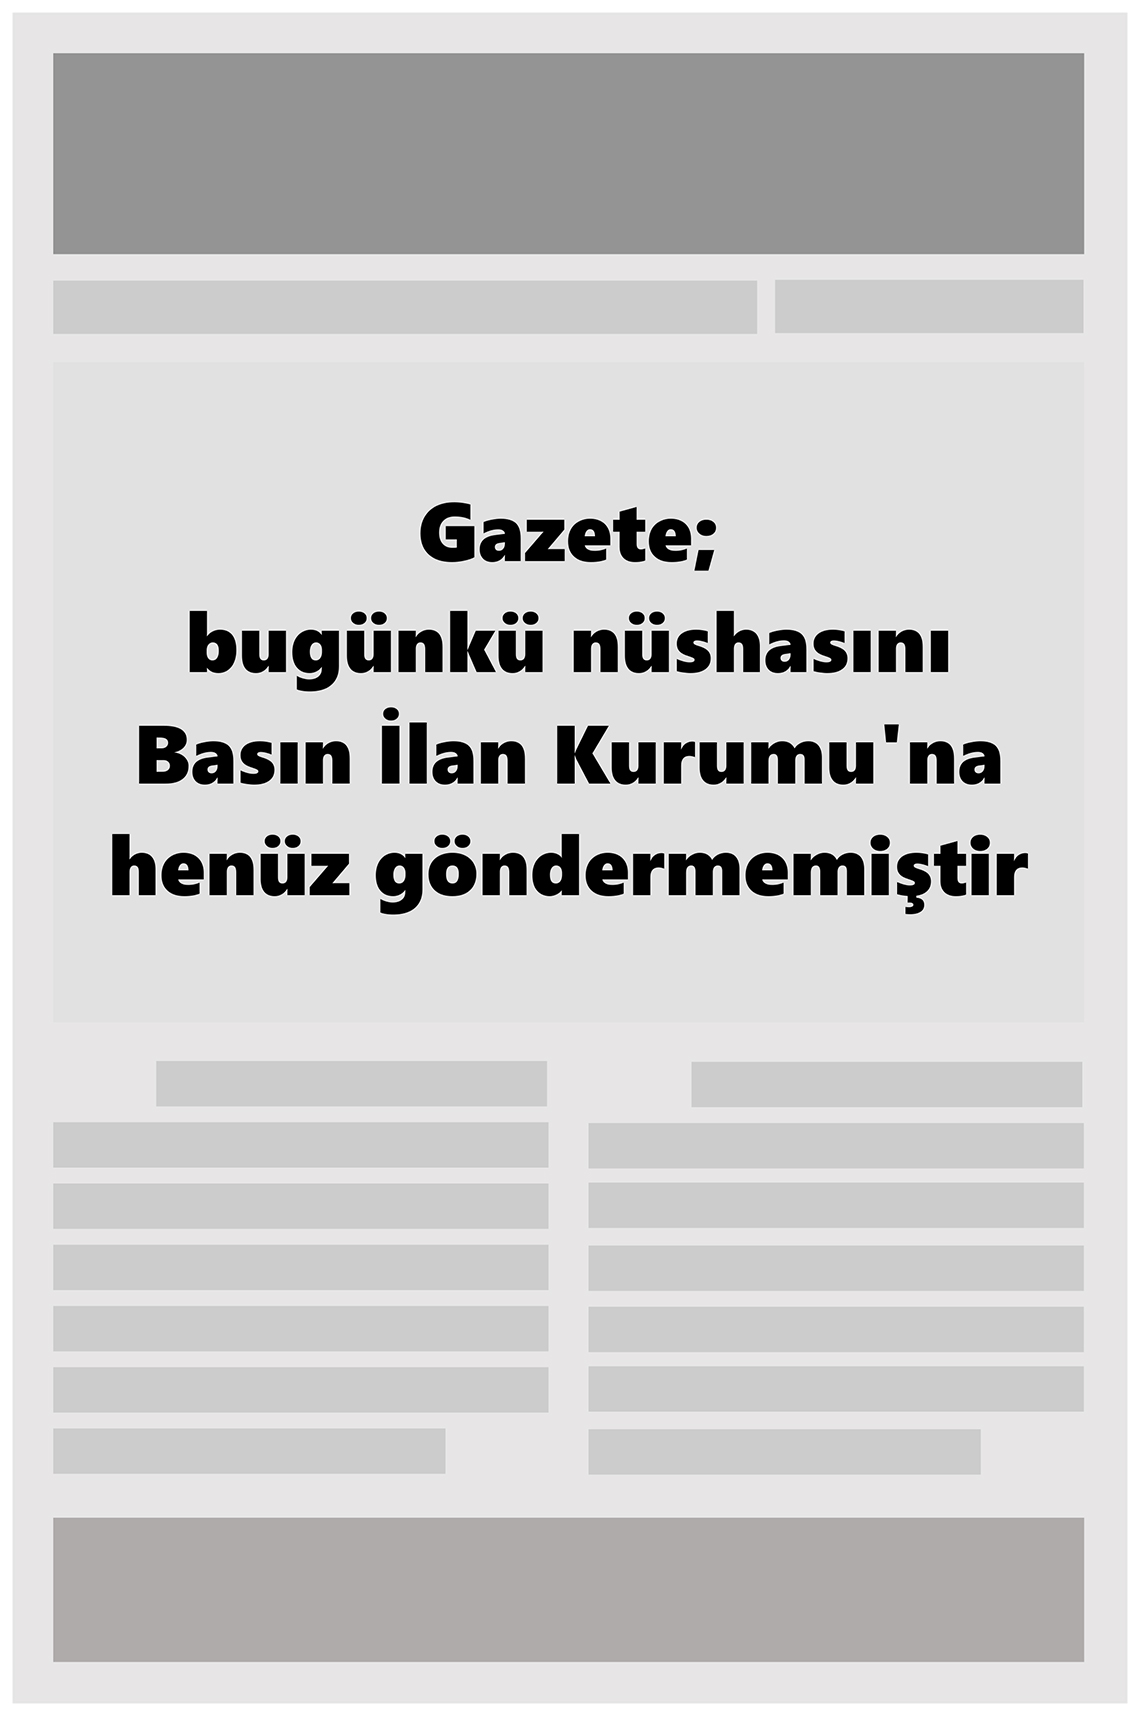 26 Mart 2023 Gazete 3 Gazete Manşeti